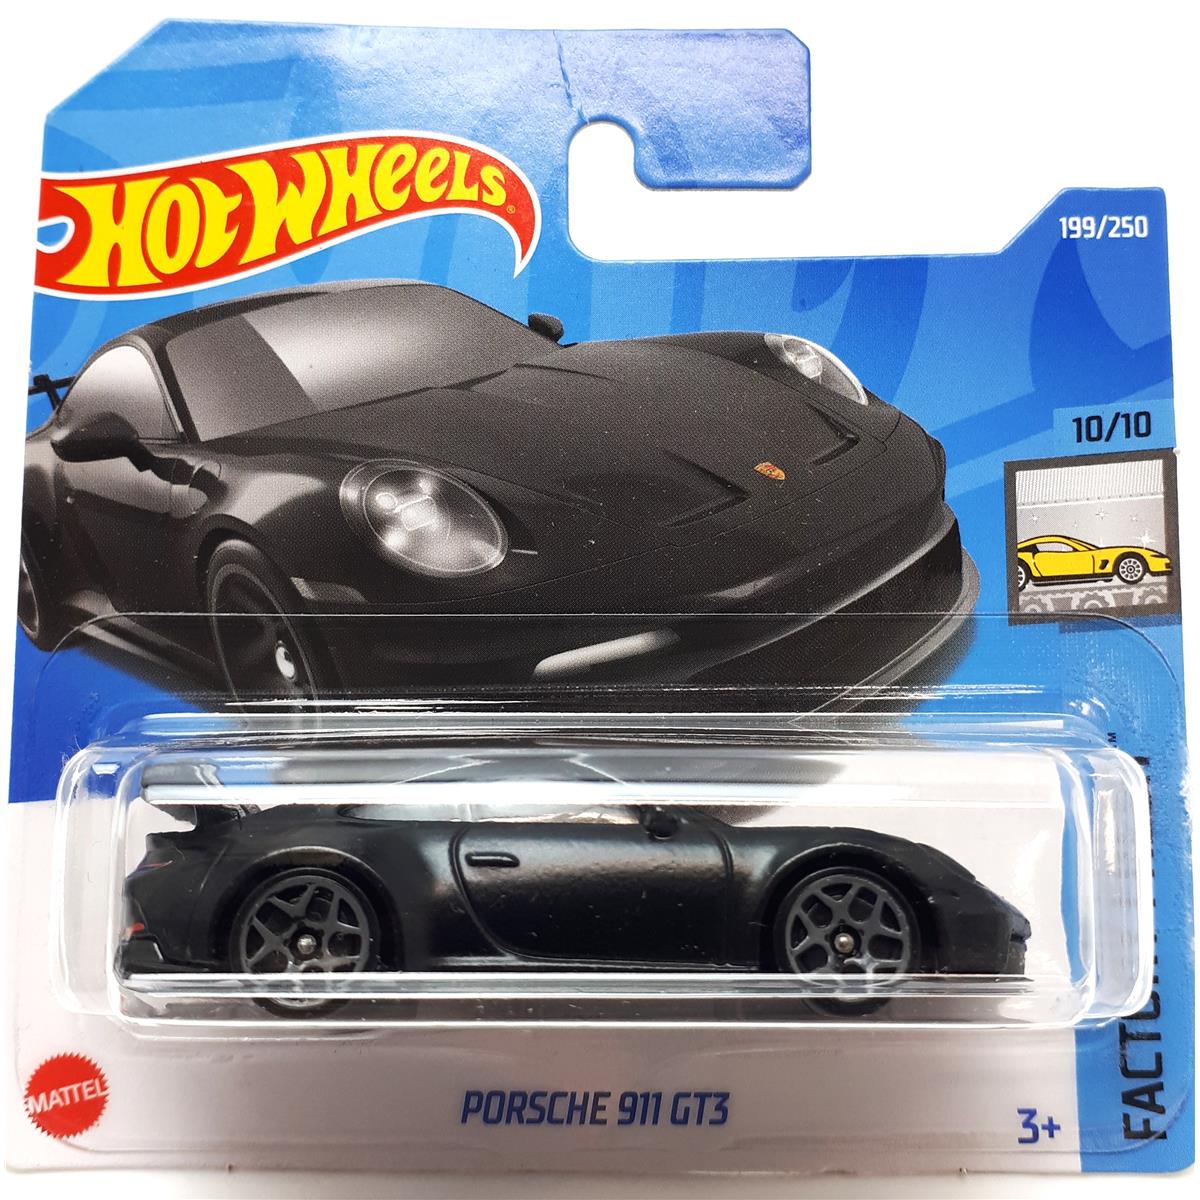 HOT WHEELS AUTO PORSCHE 911 GT3 10/10-16339